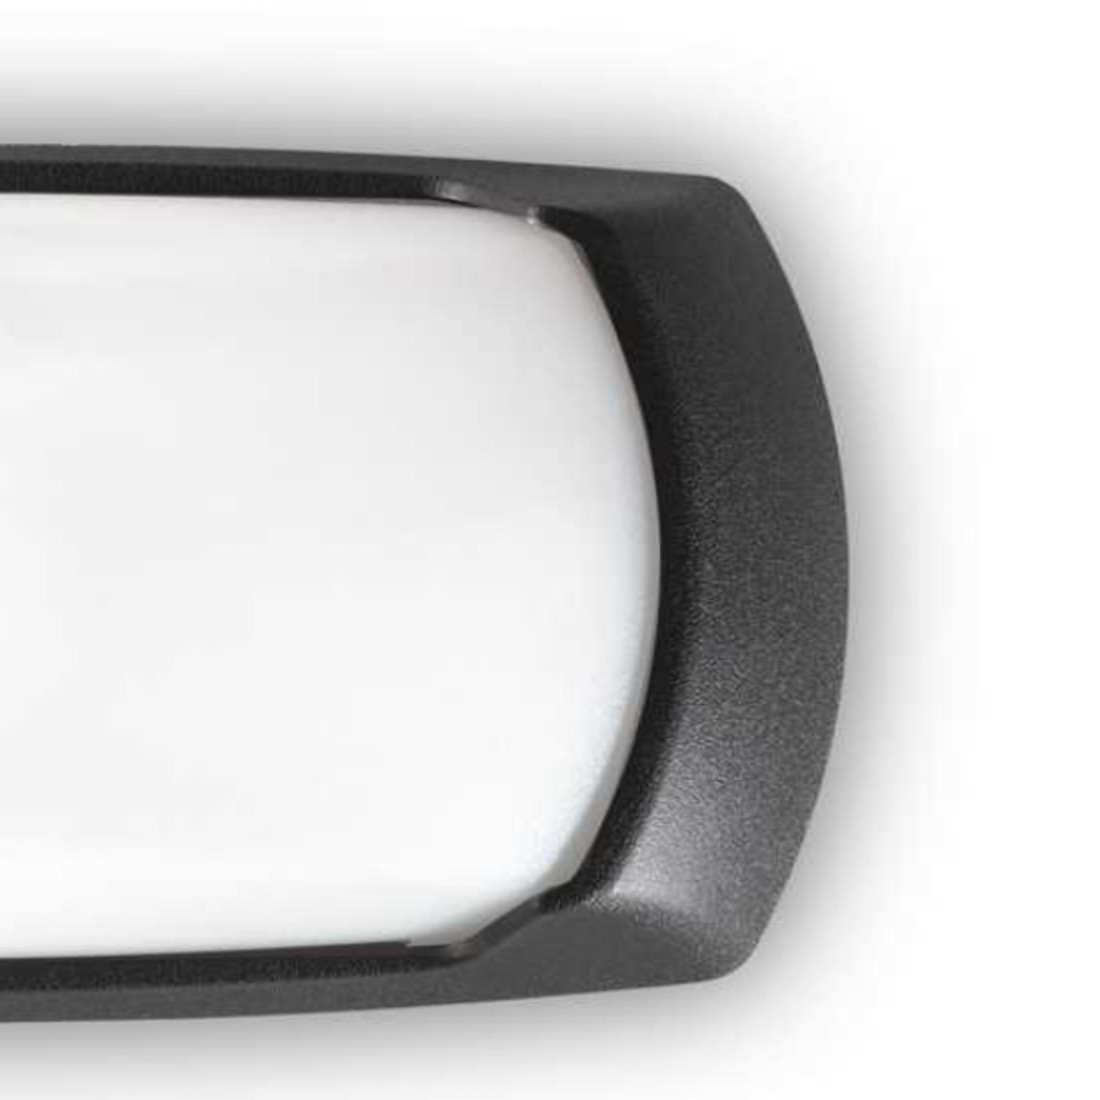 Applikationsband aus weißem, schwarzem oder grauem Harz, e27-Fassung, LED.